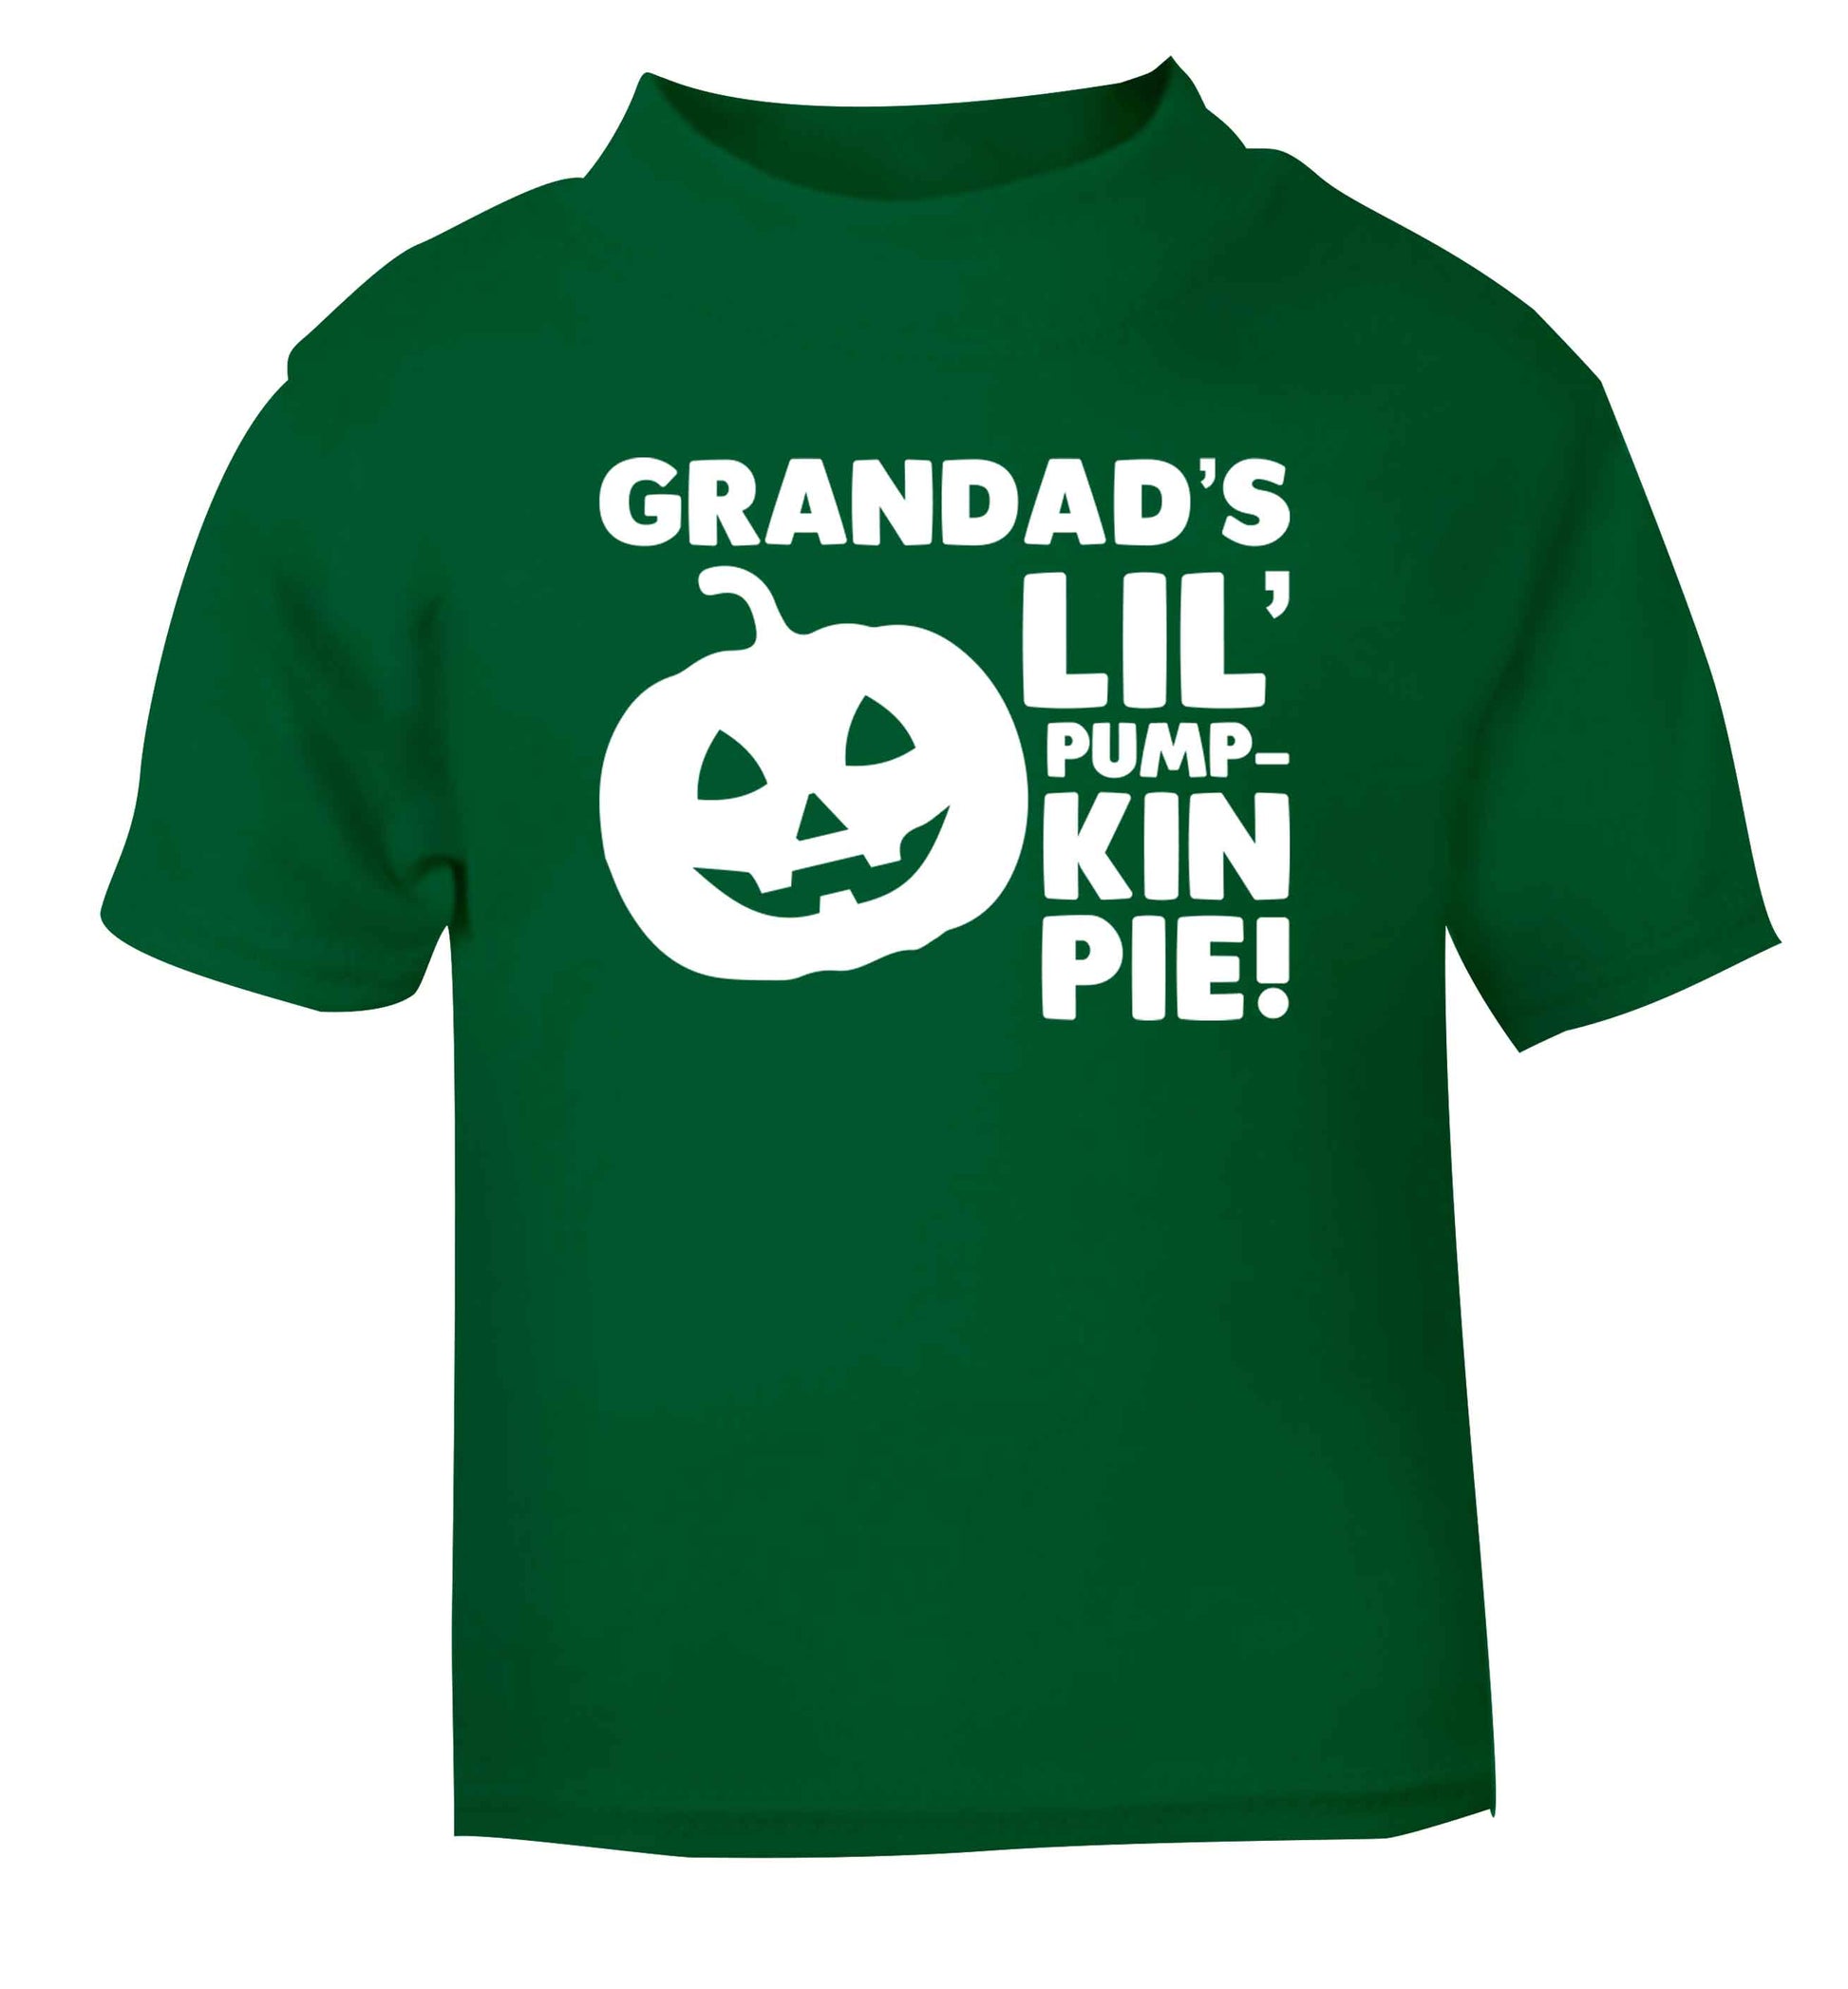 Grandad's lil' pumpkin pie green baby toddler Tshirt 2 Years